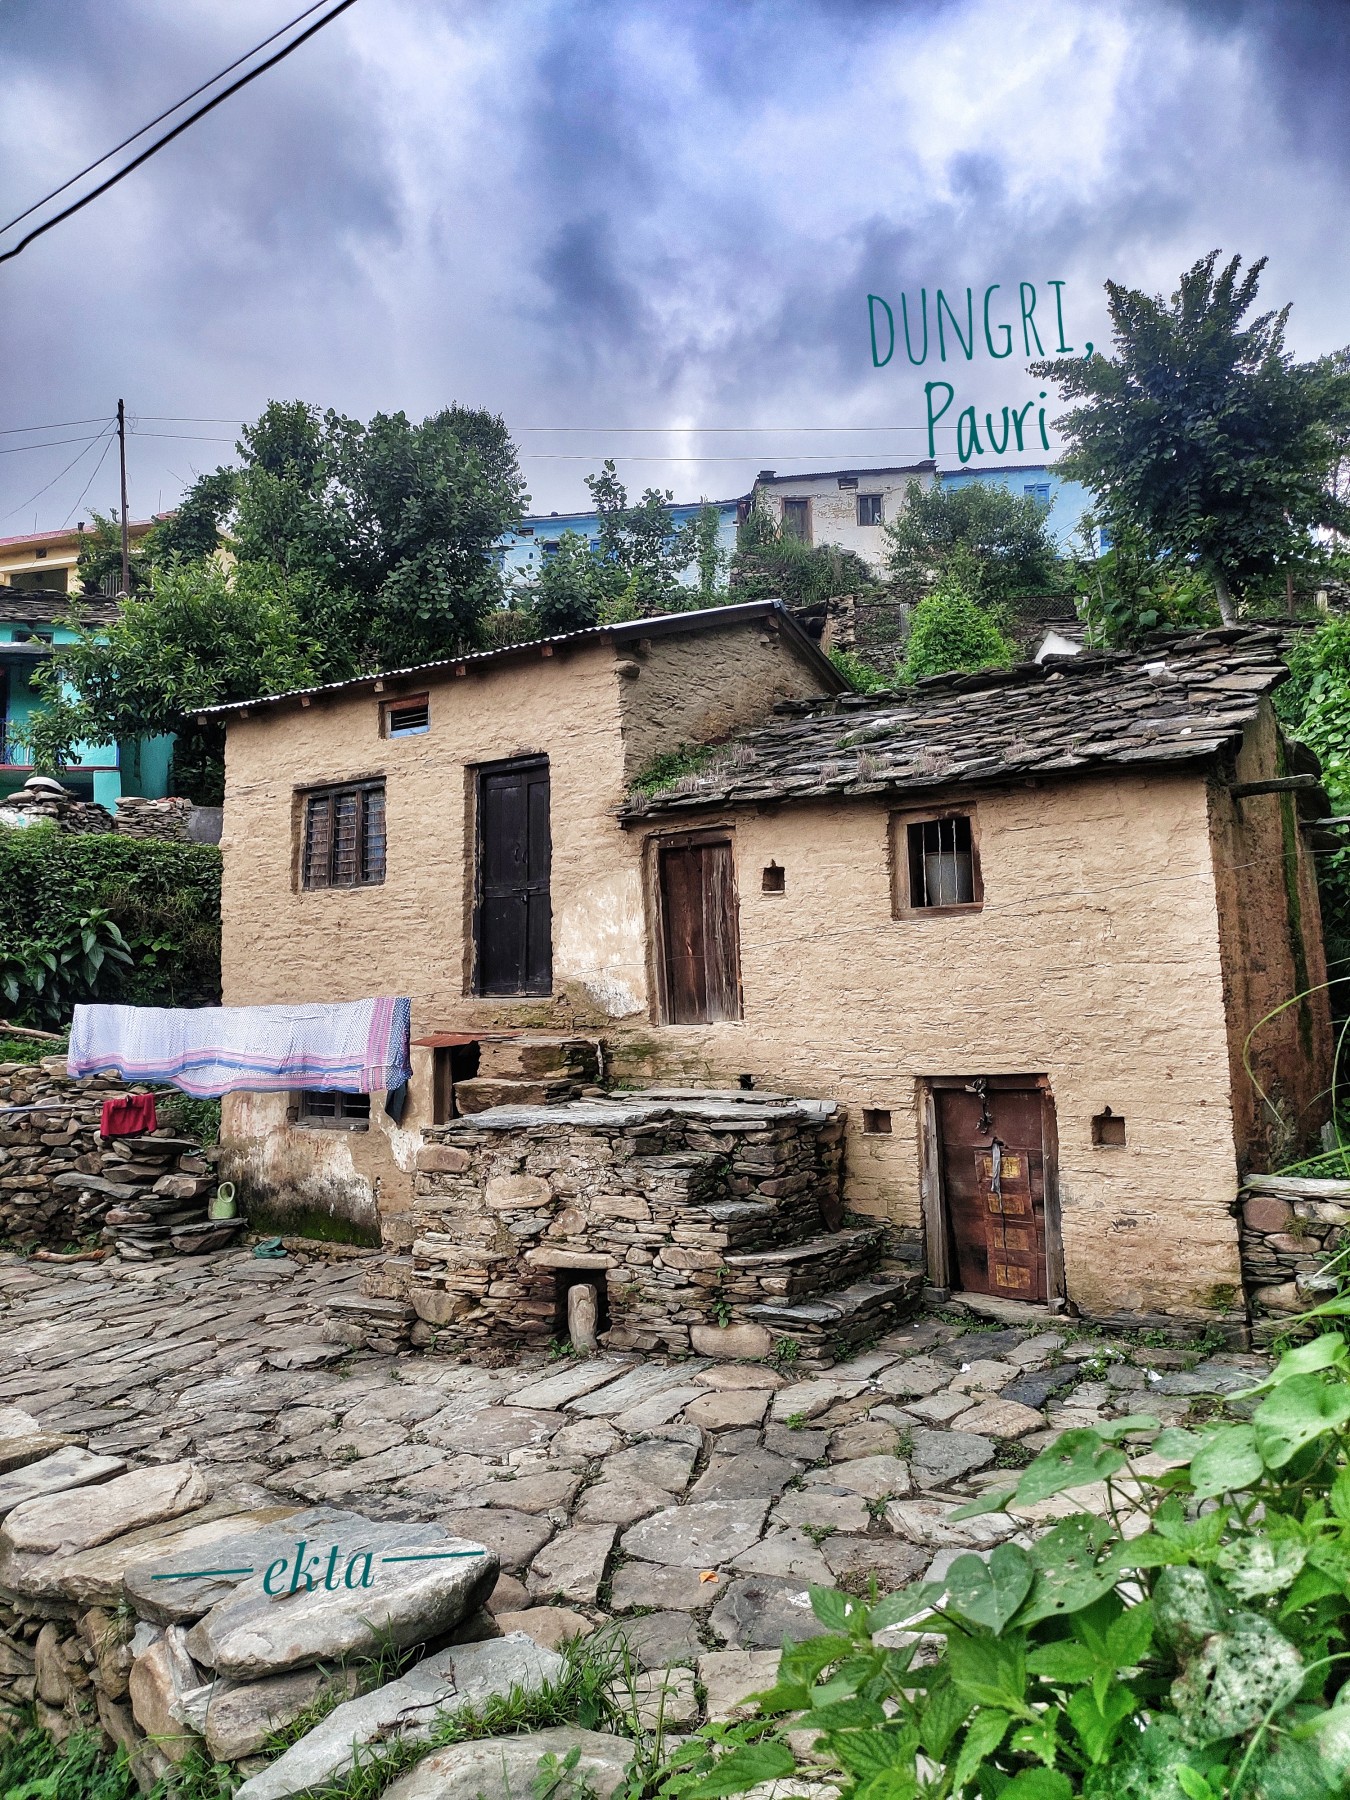 Dungri village, Pauri Garhwal